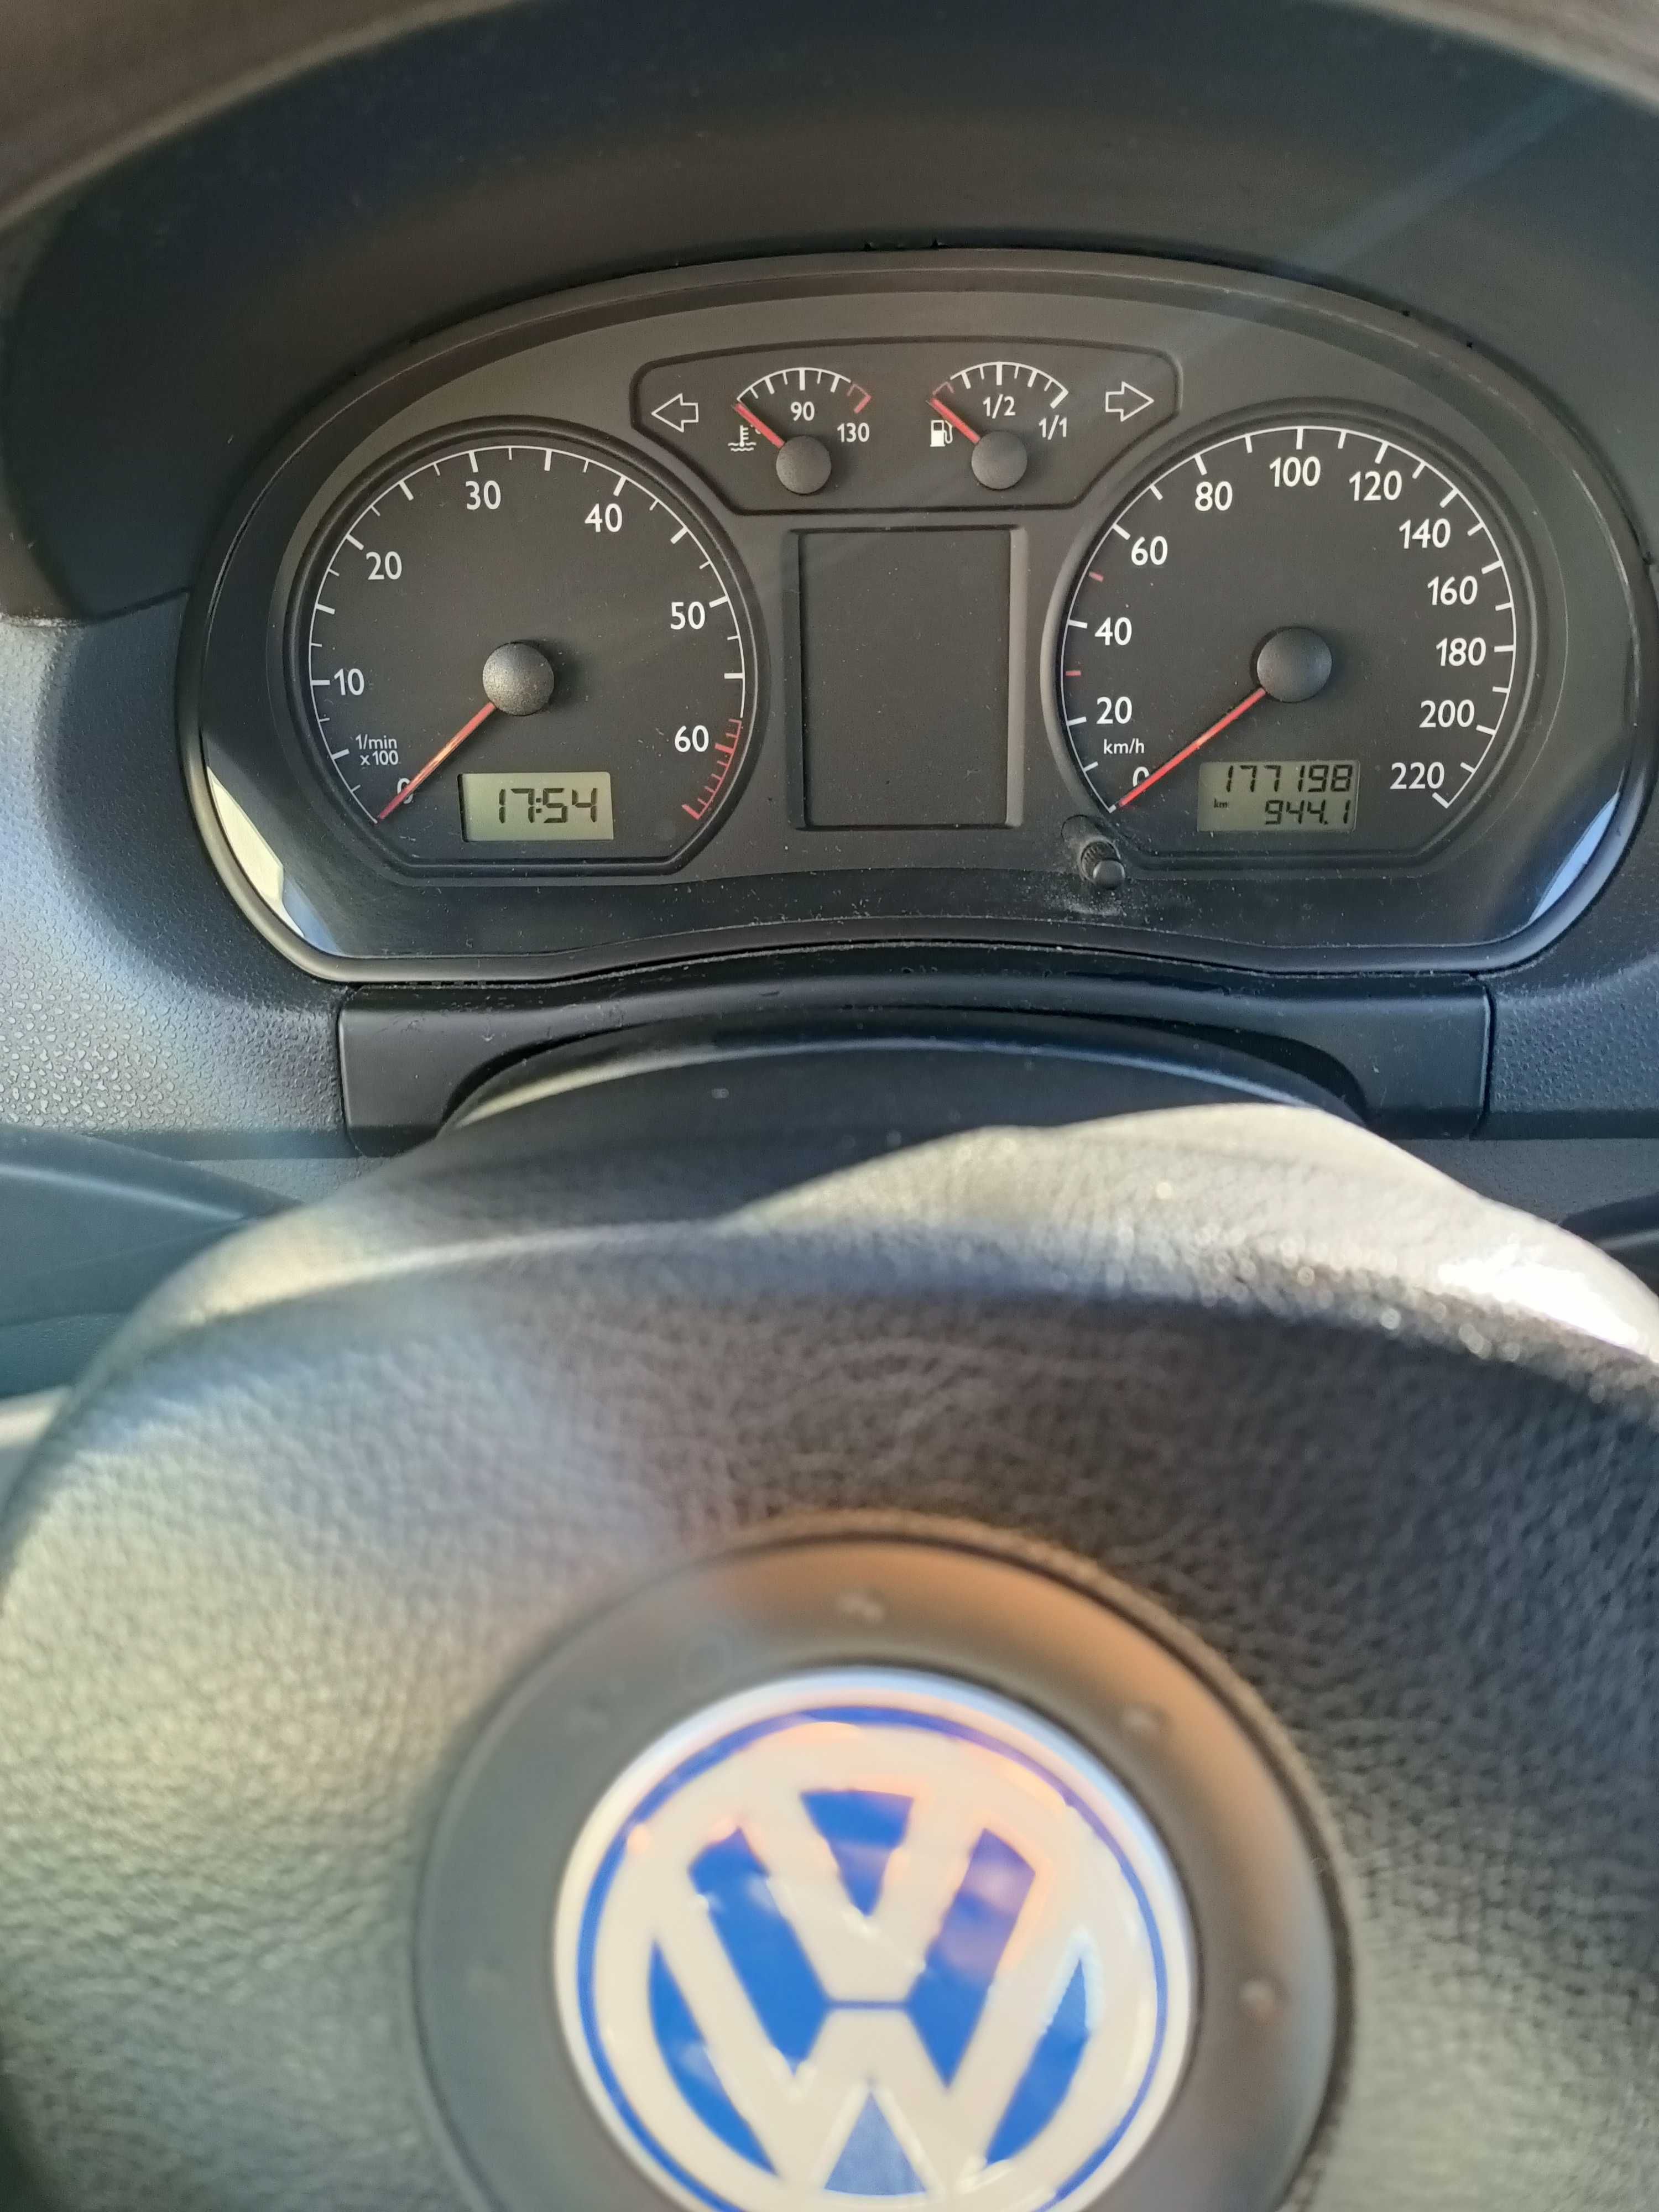 Polo VW 2002 - Gasolina